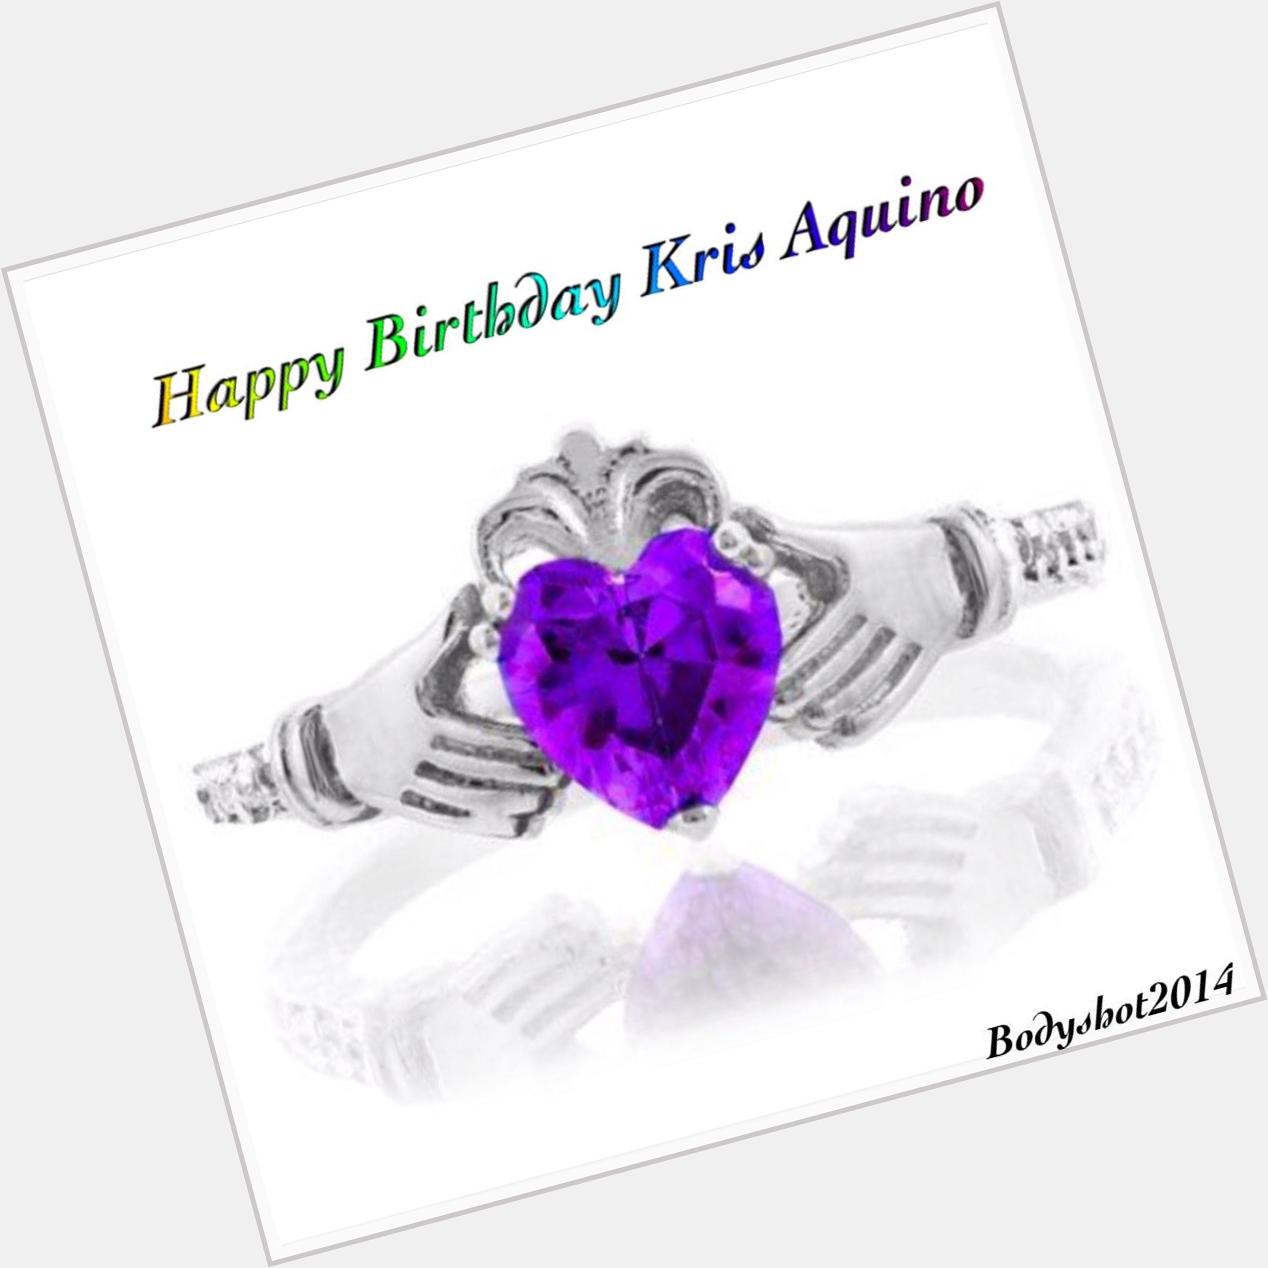 Happy Birthday Ms Kris Aquino 